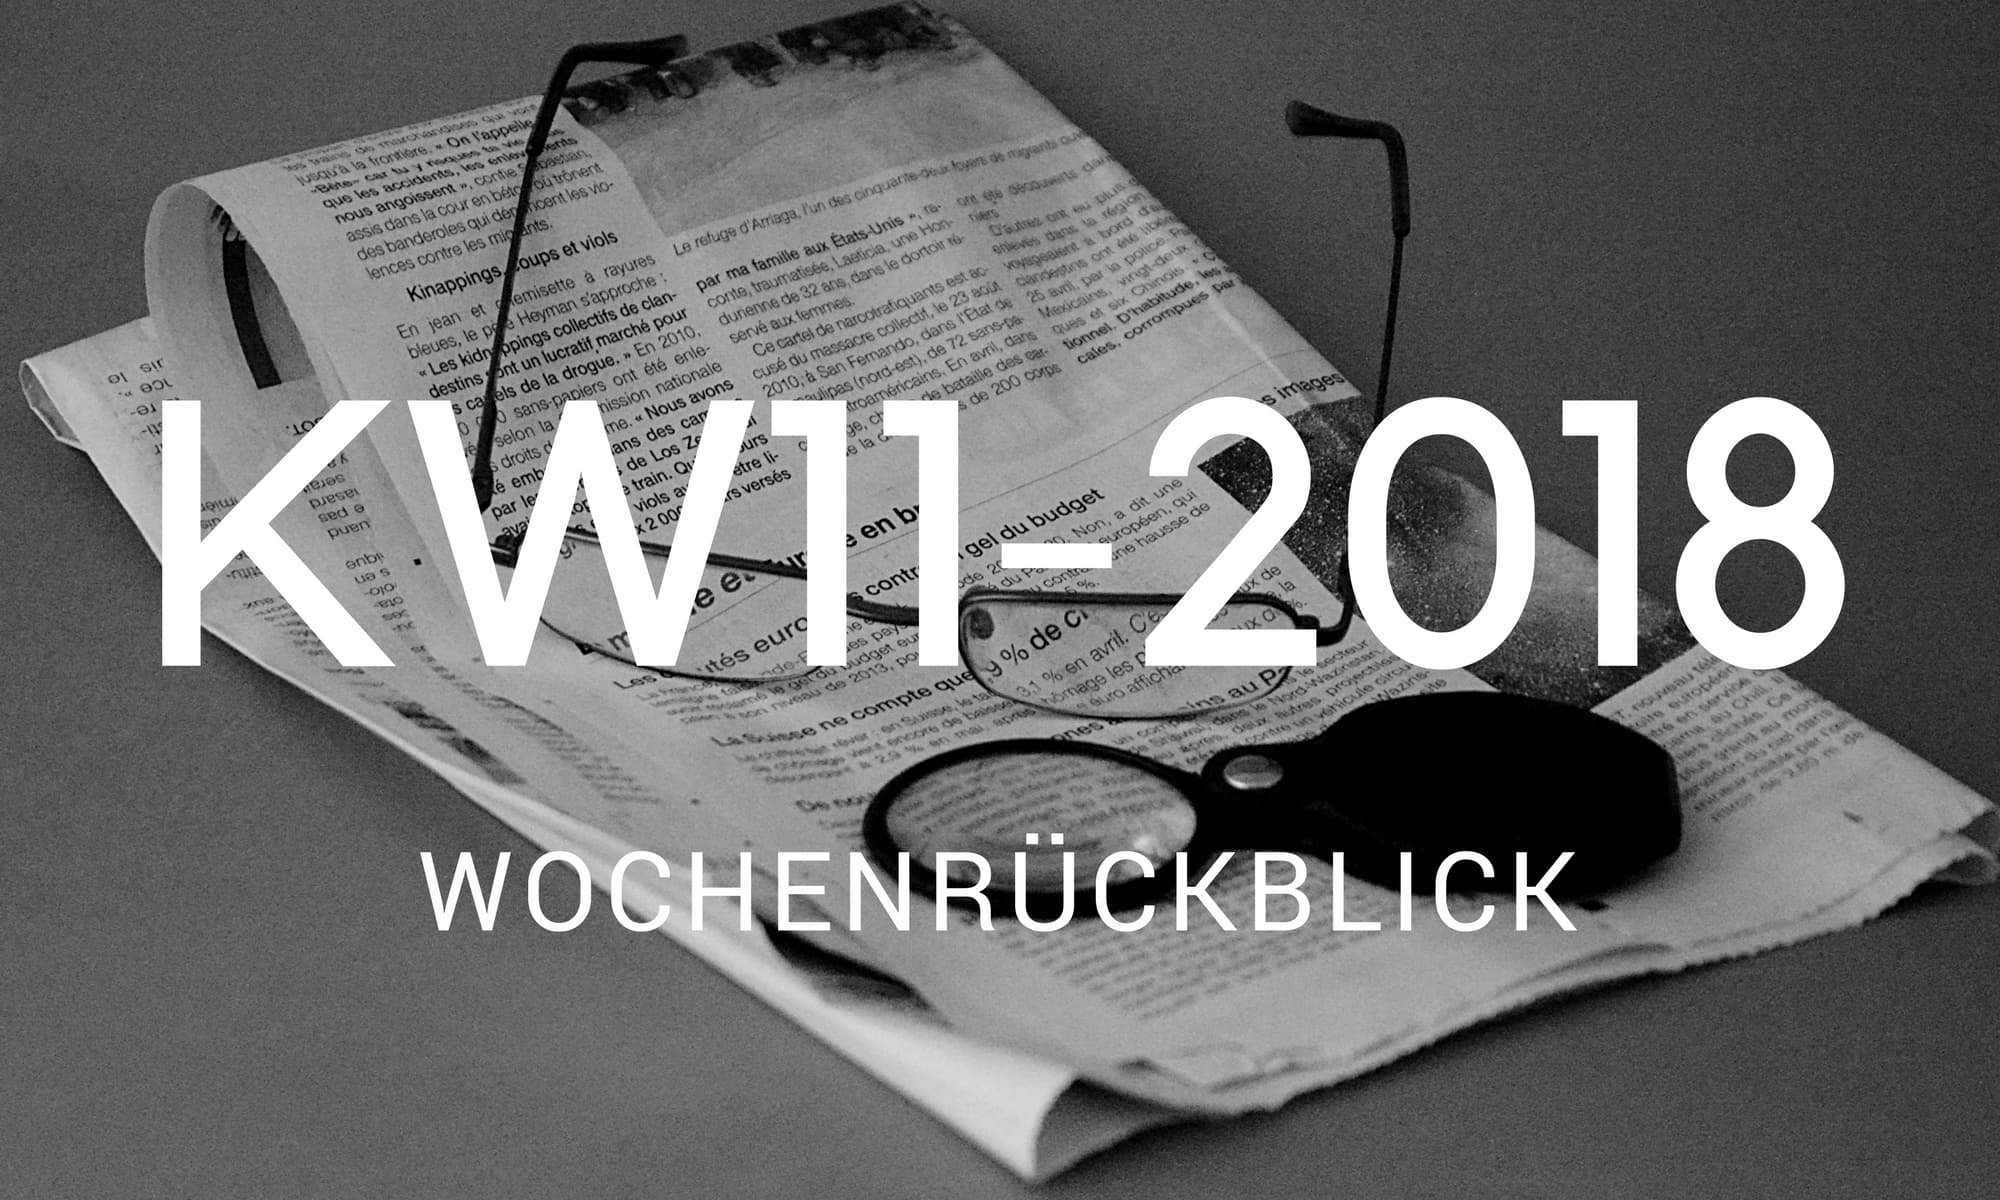 wochenrueckblick camping news KW11 2018